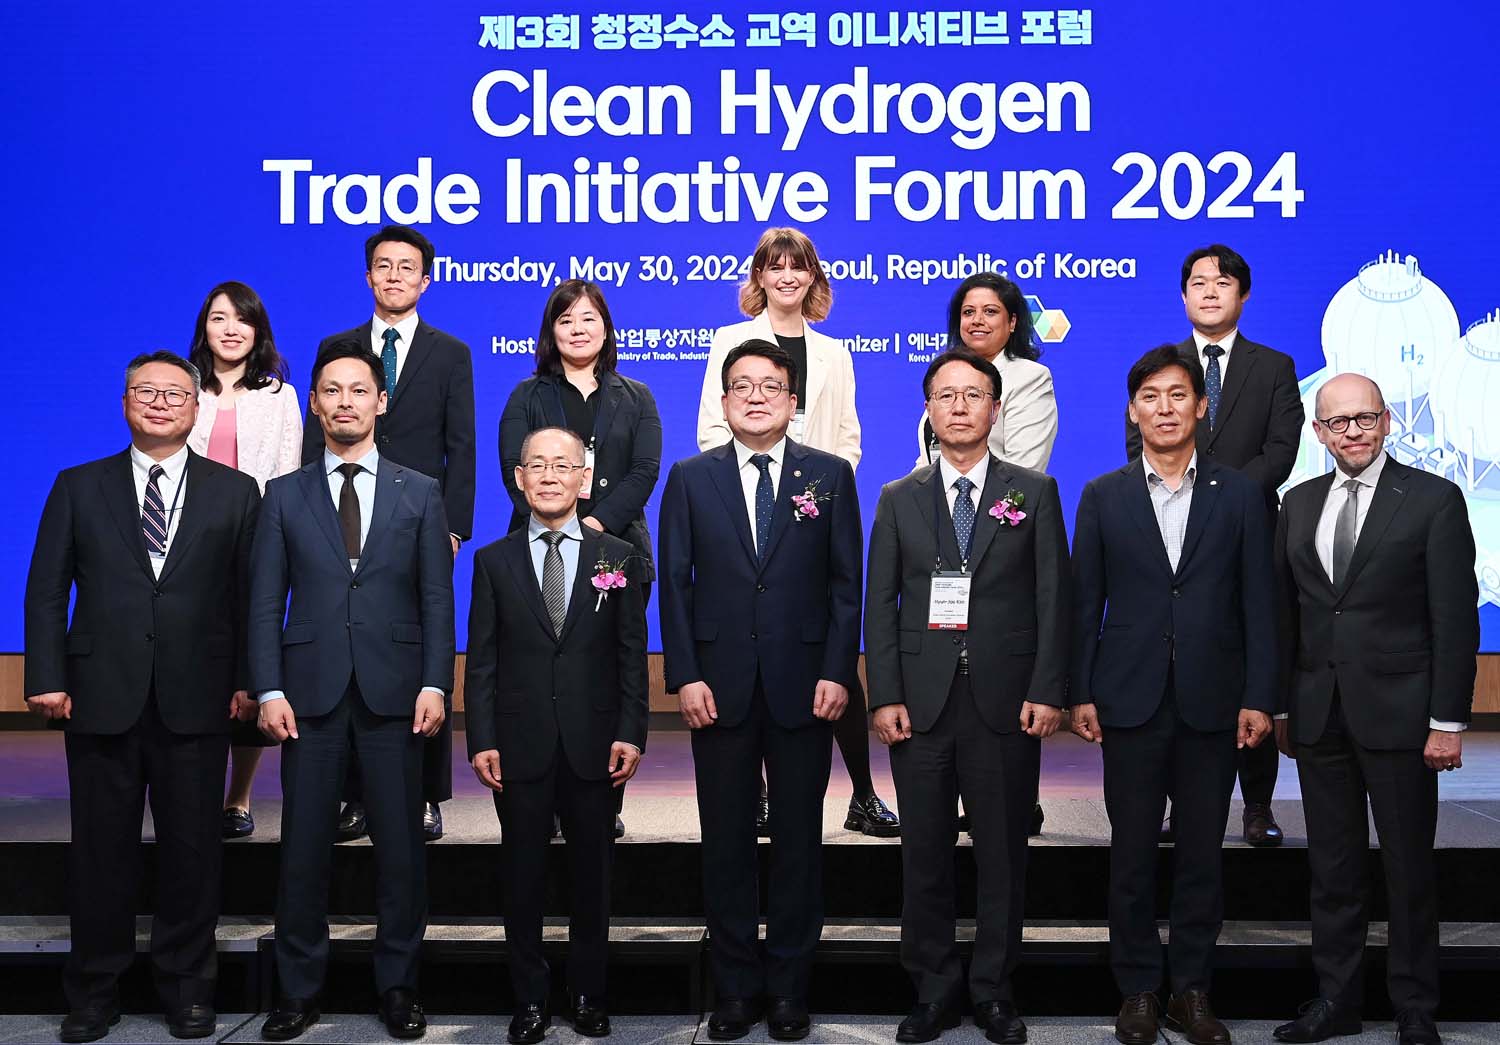 Vice Minister attends Clean Hydrogen Trade Initiative Forum 2024